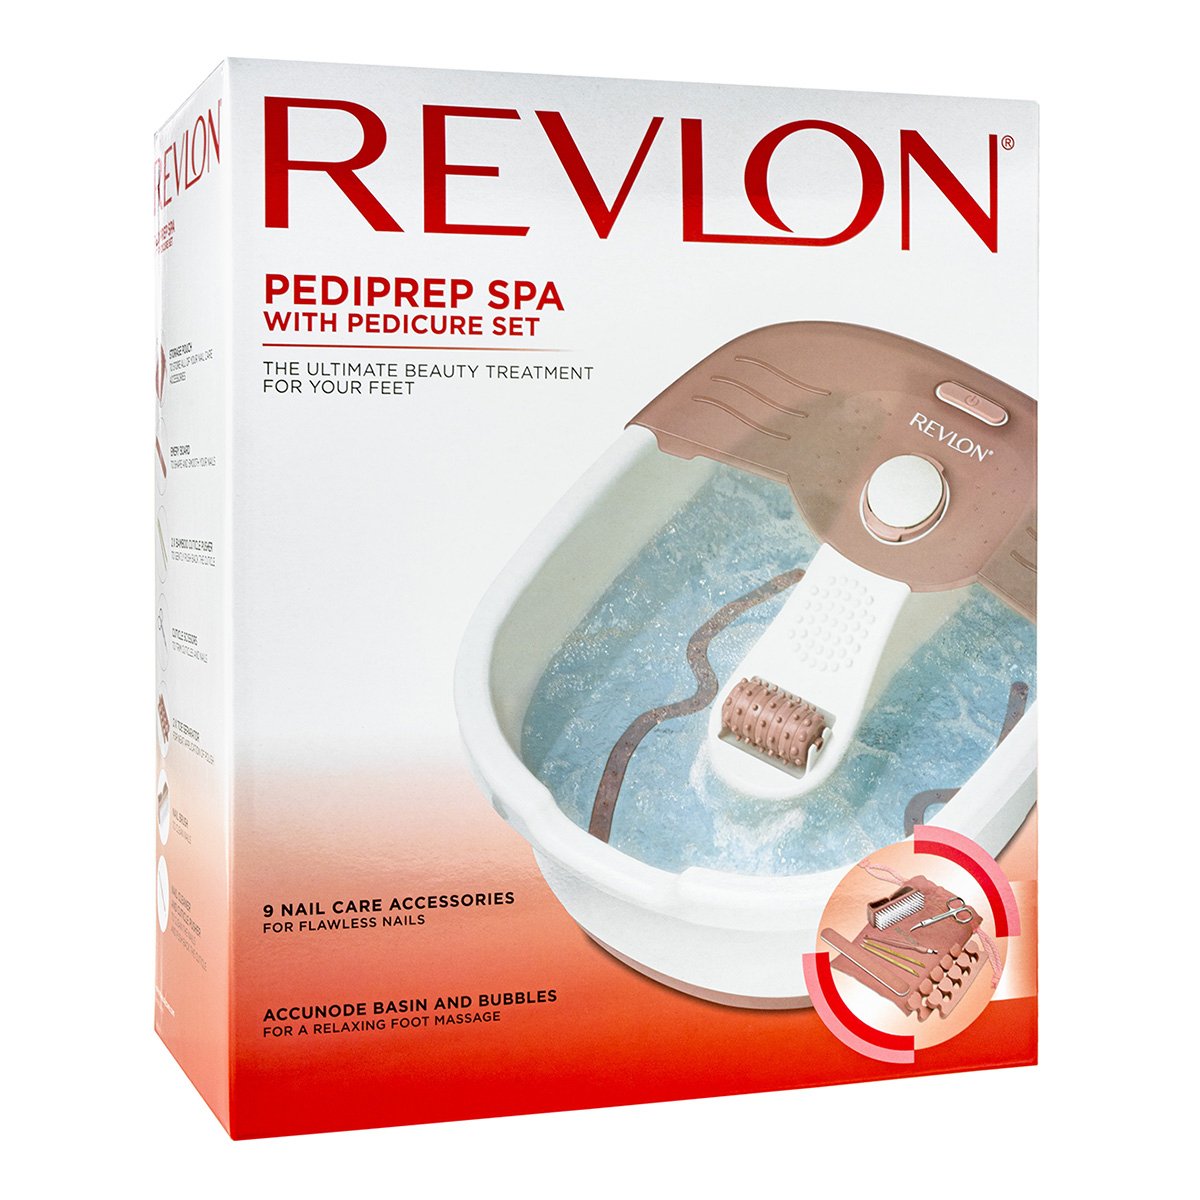 7.Revlon Pediprep Foot Spa €39.95, 